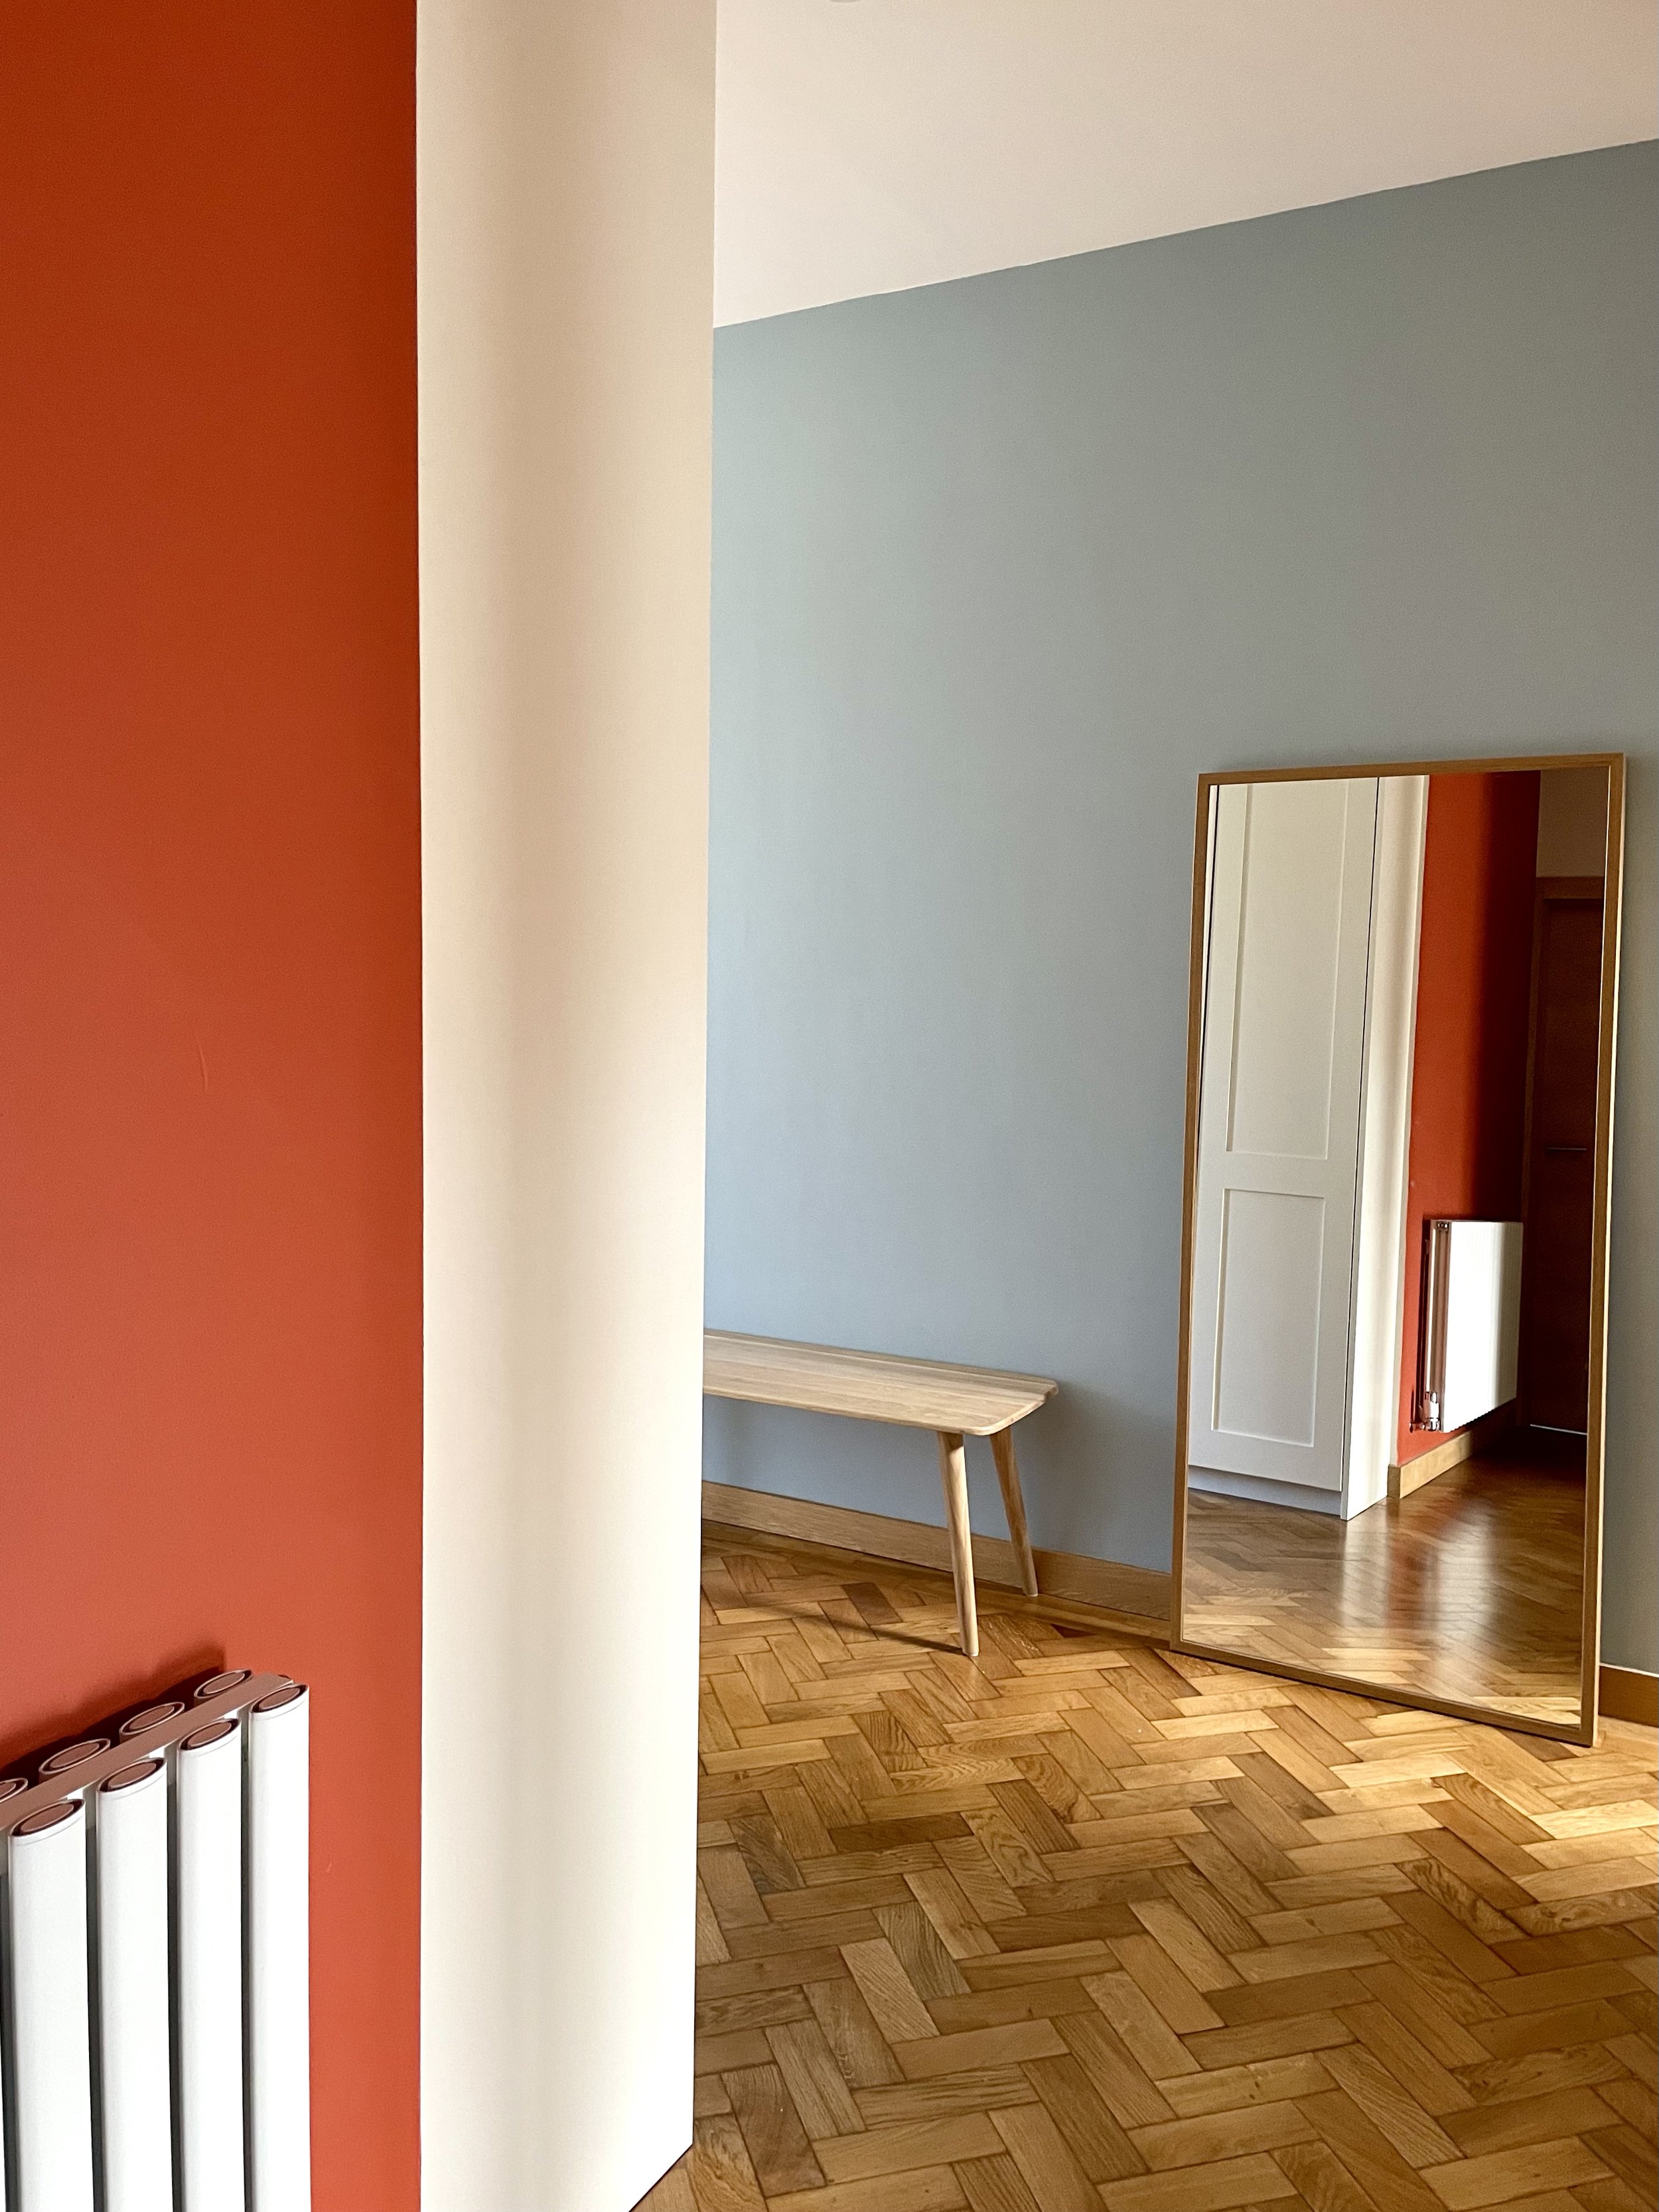 Charlotte Bucciero-Interiors-terracotta-wall-hallway-colourblocking-parquet-floor-bench-mirror-reflection.jpg